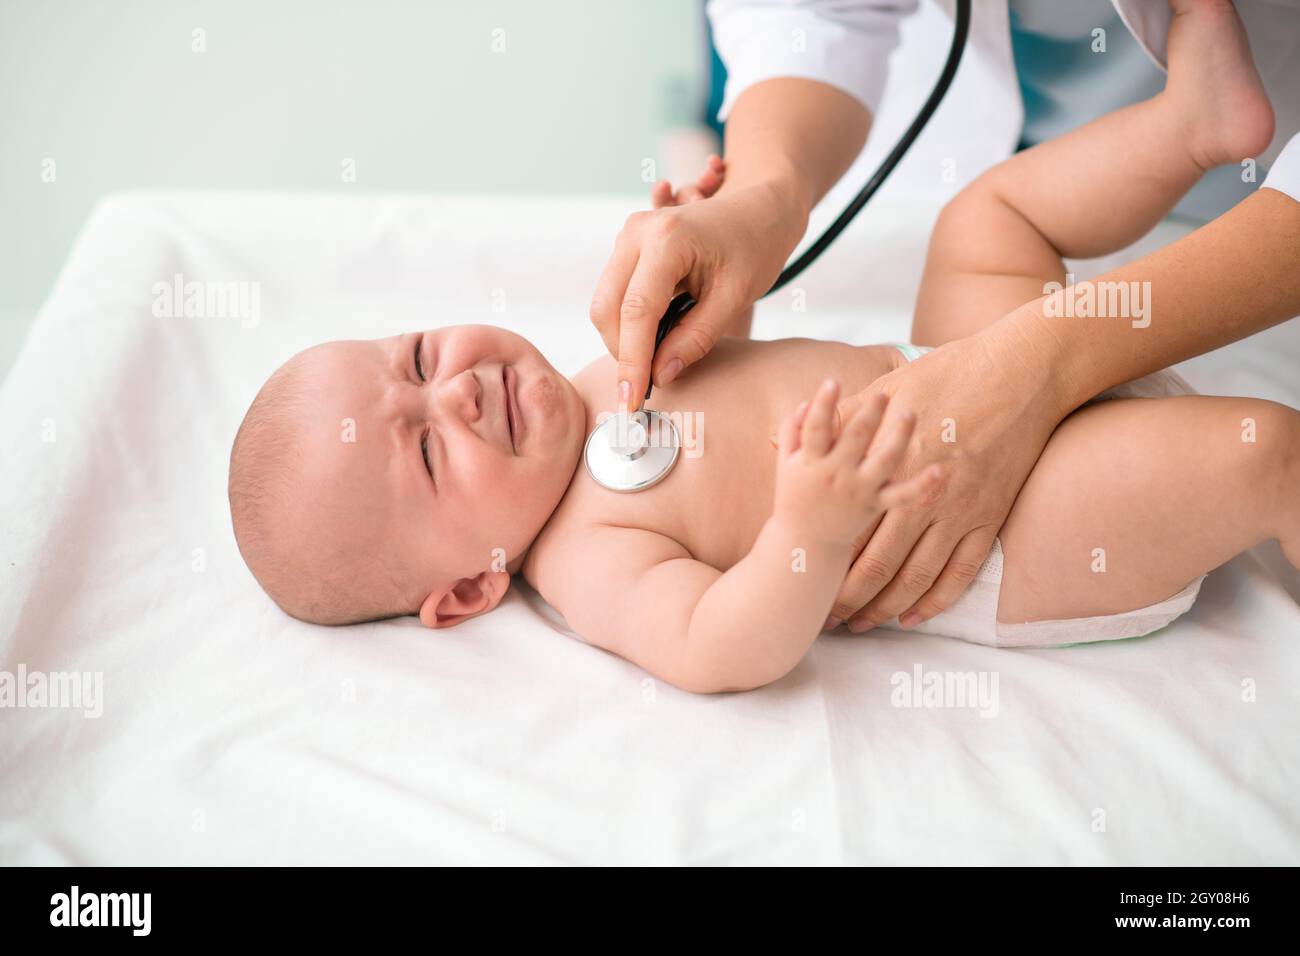 Cute Caucasian newborn undergoing a medical examination Stock Photo